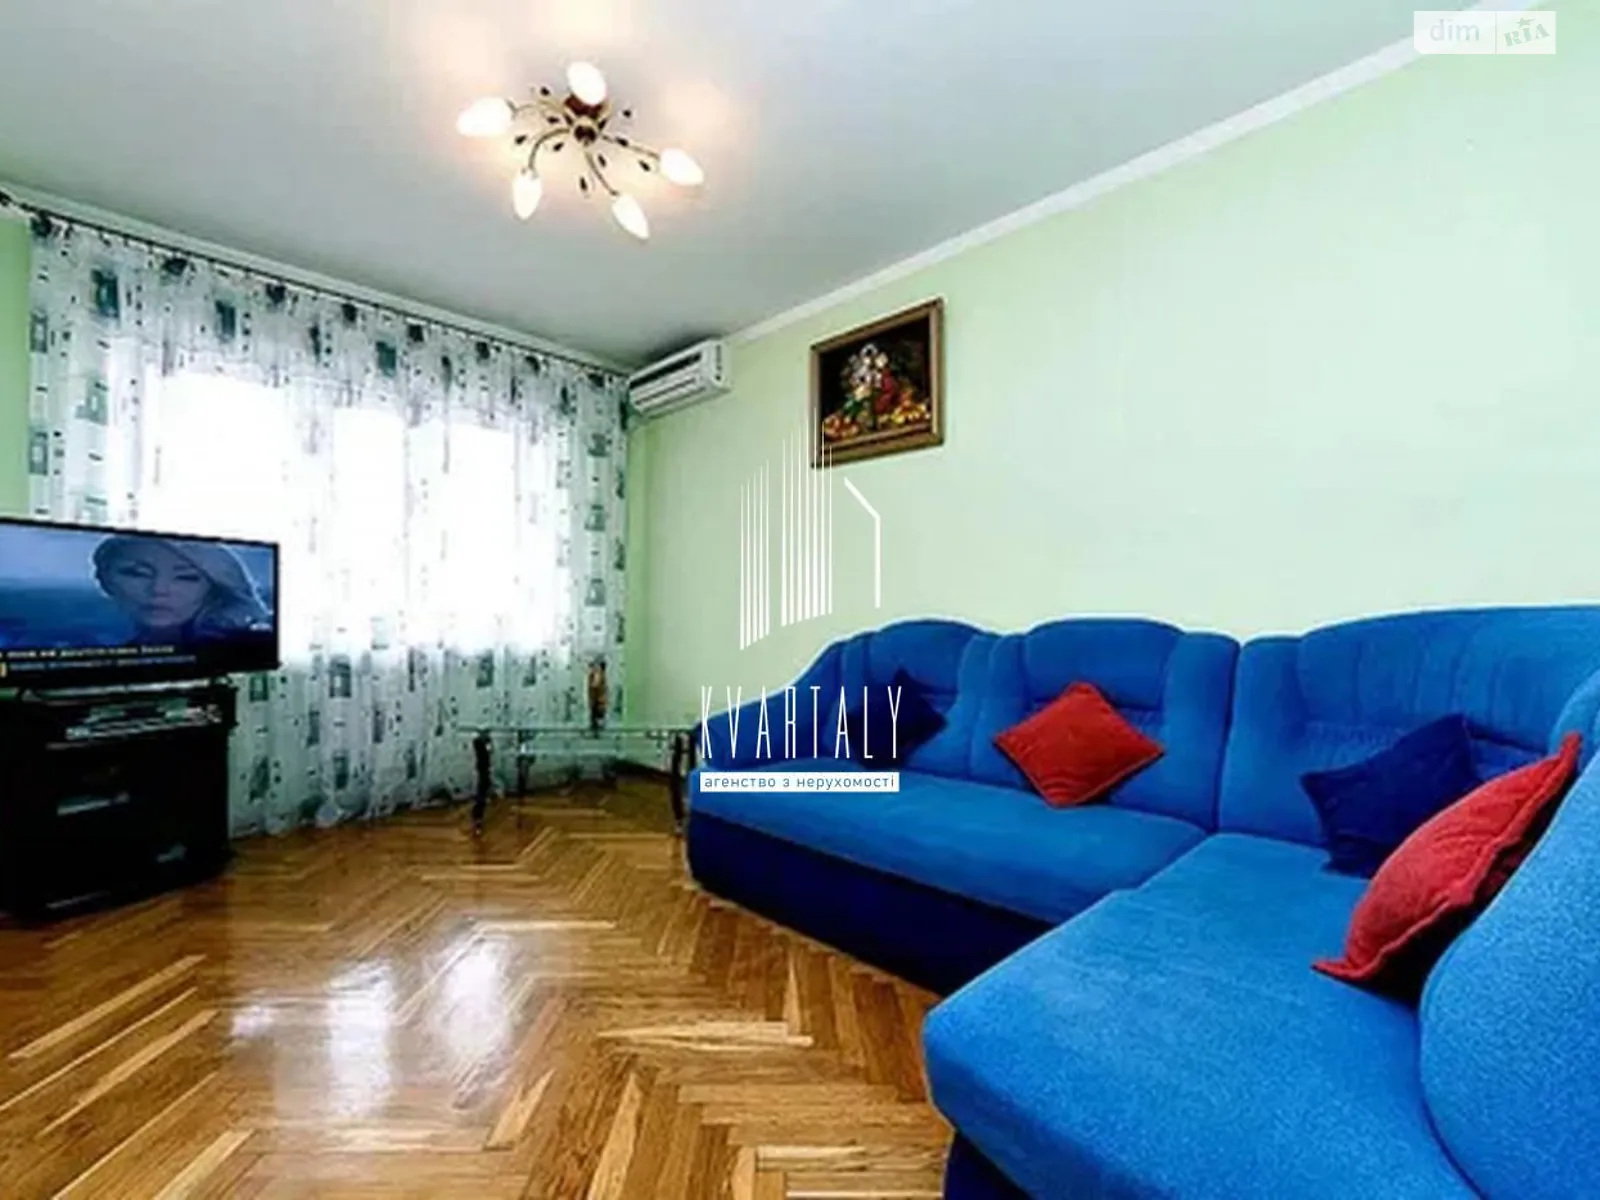 Сдается в аренду 3-комнатная квартира 85 кв. м в Киеве, ул. Шота Руставели, 25 - фото 1